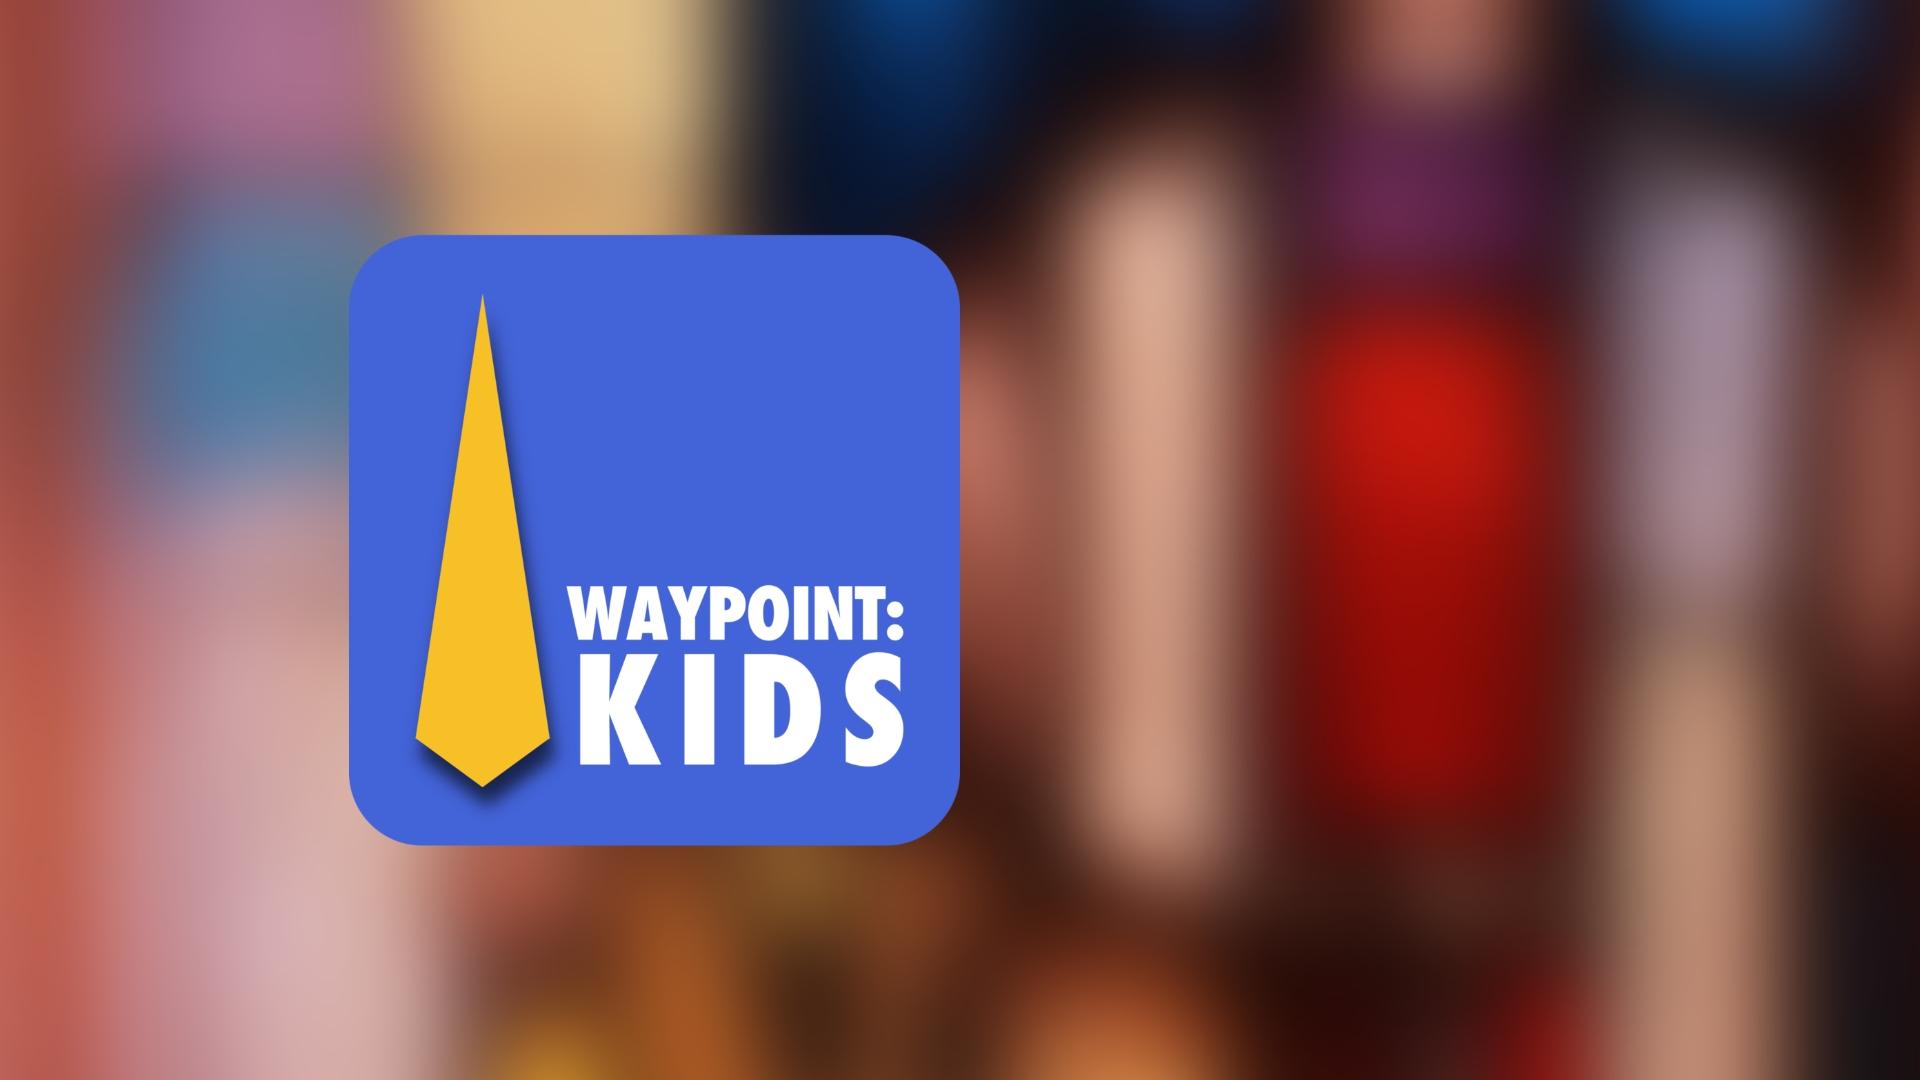 Waypoint Kids On Its Way